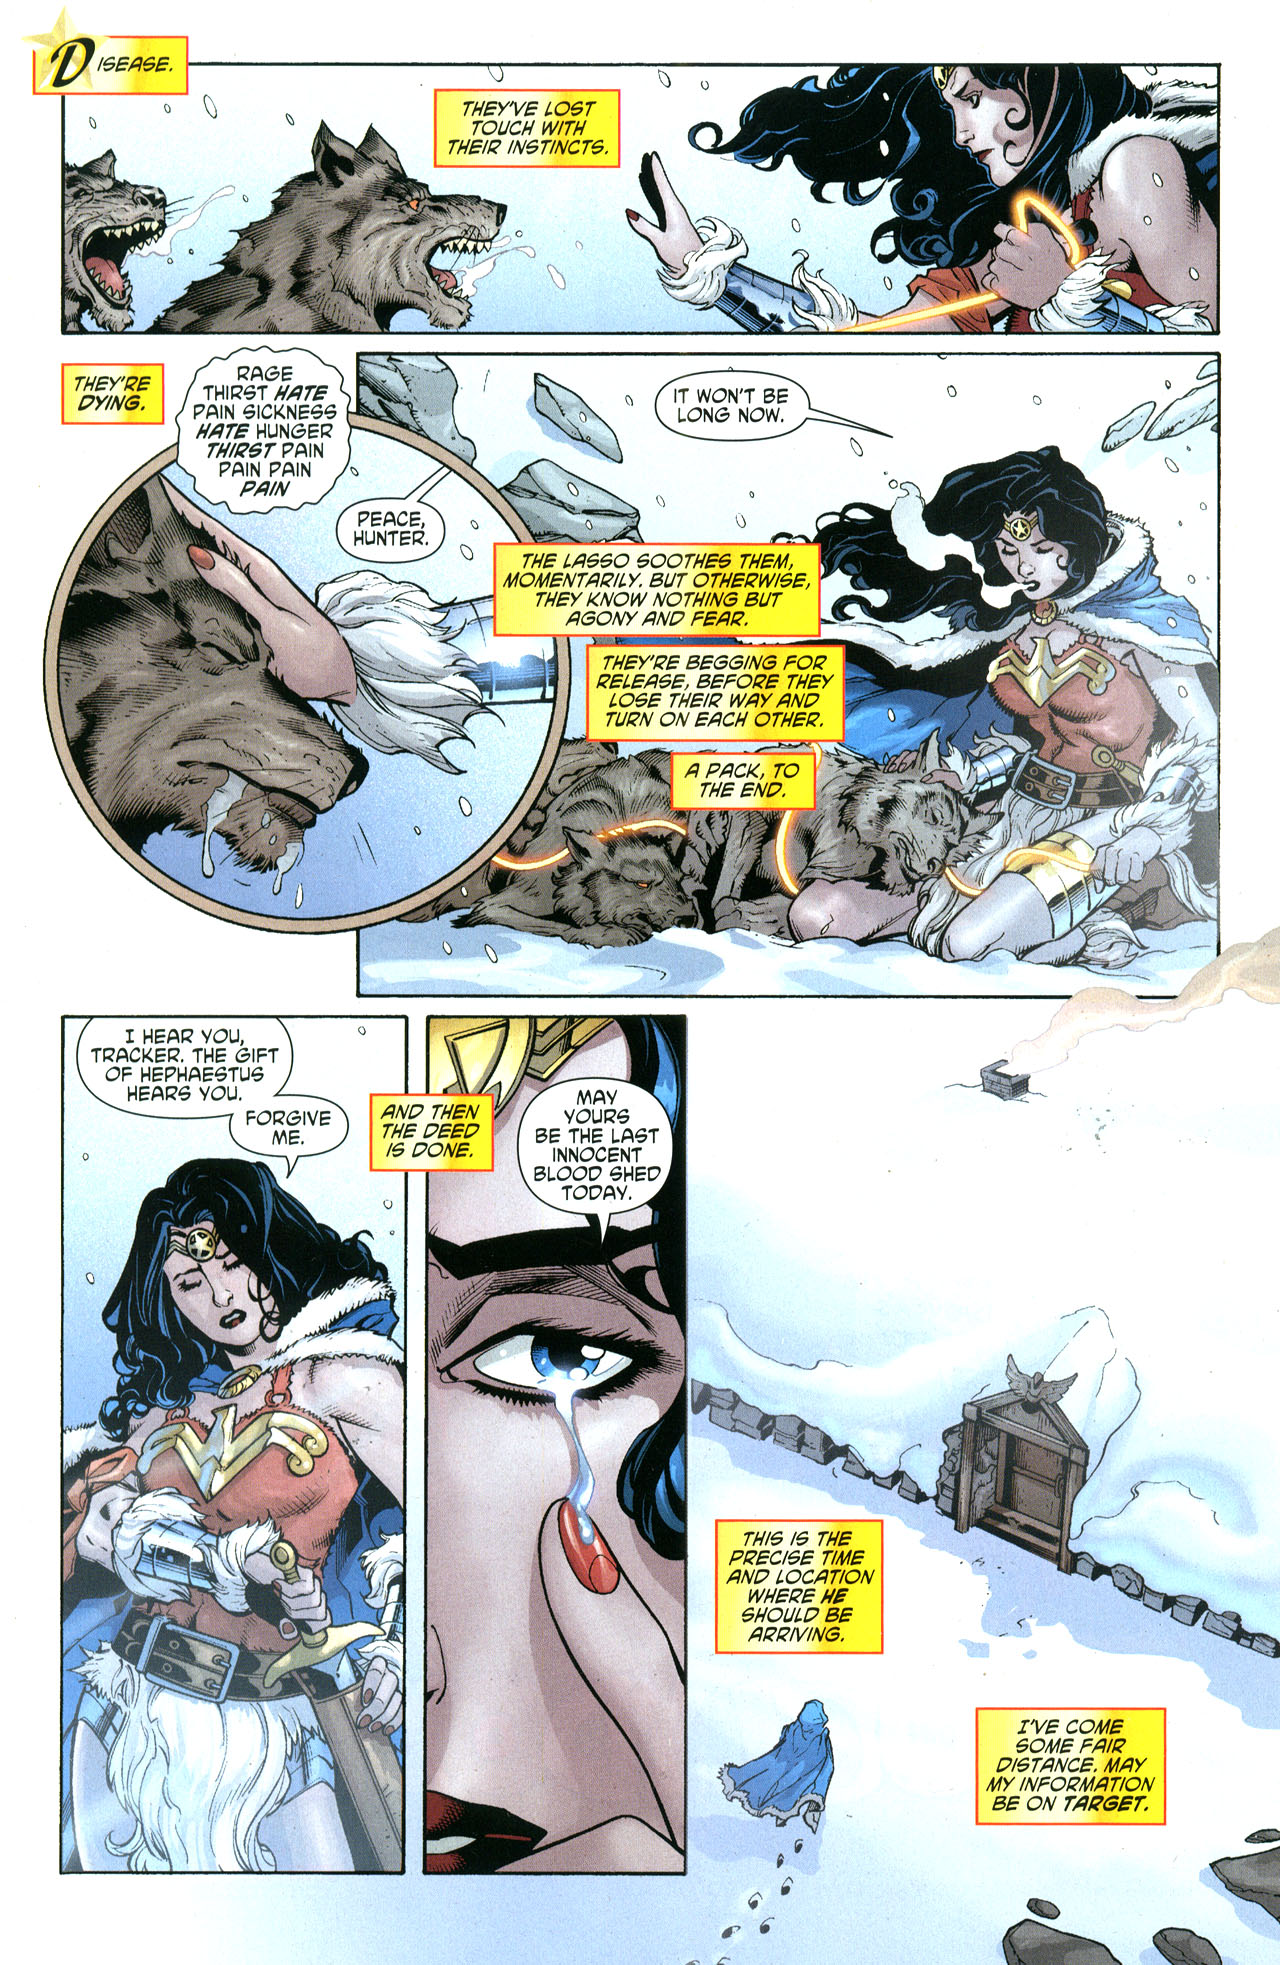 Wonder Woman (2006) 20 Page 6